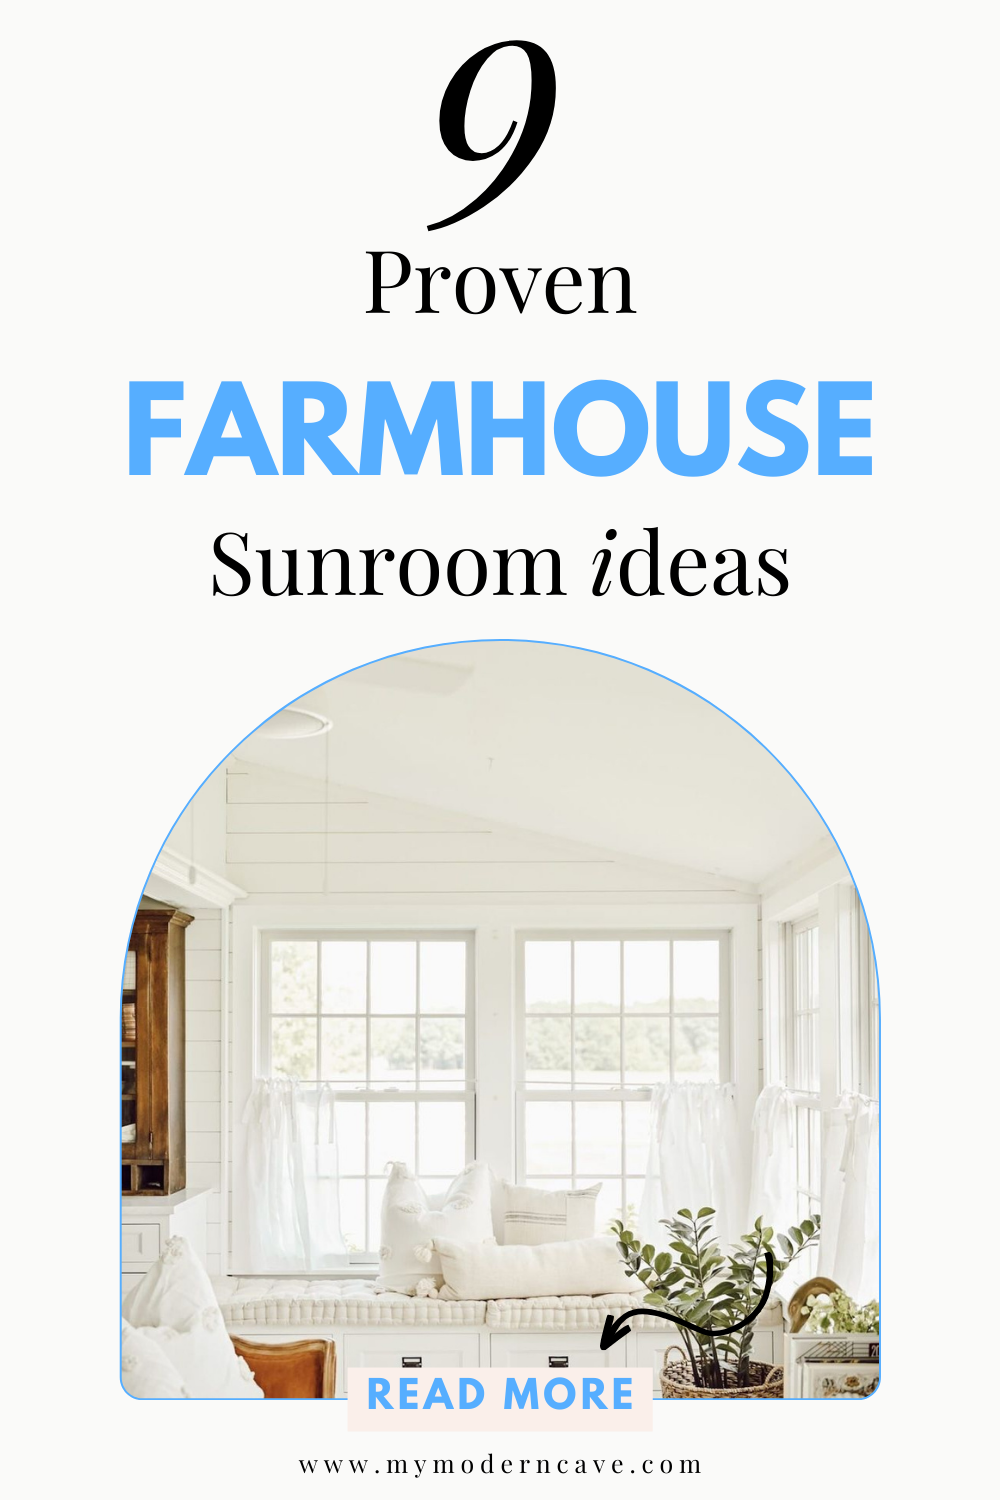 infographic on farmhouse Sunroom ideas